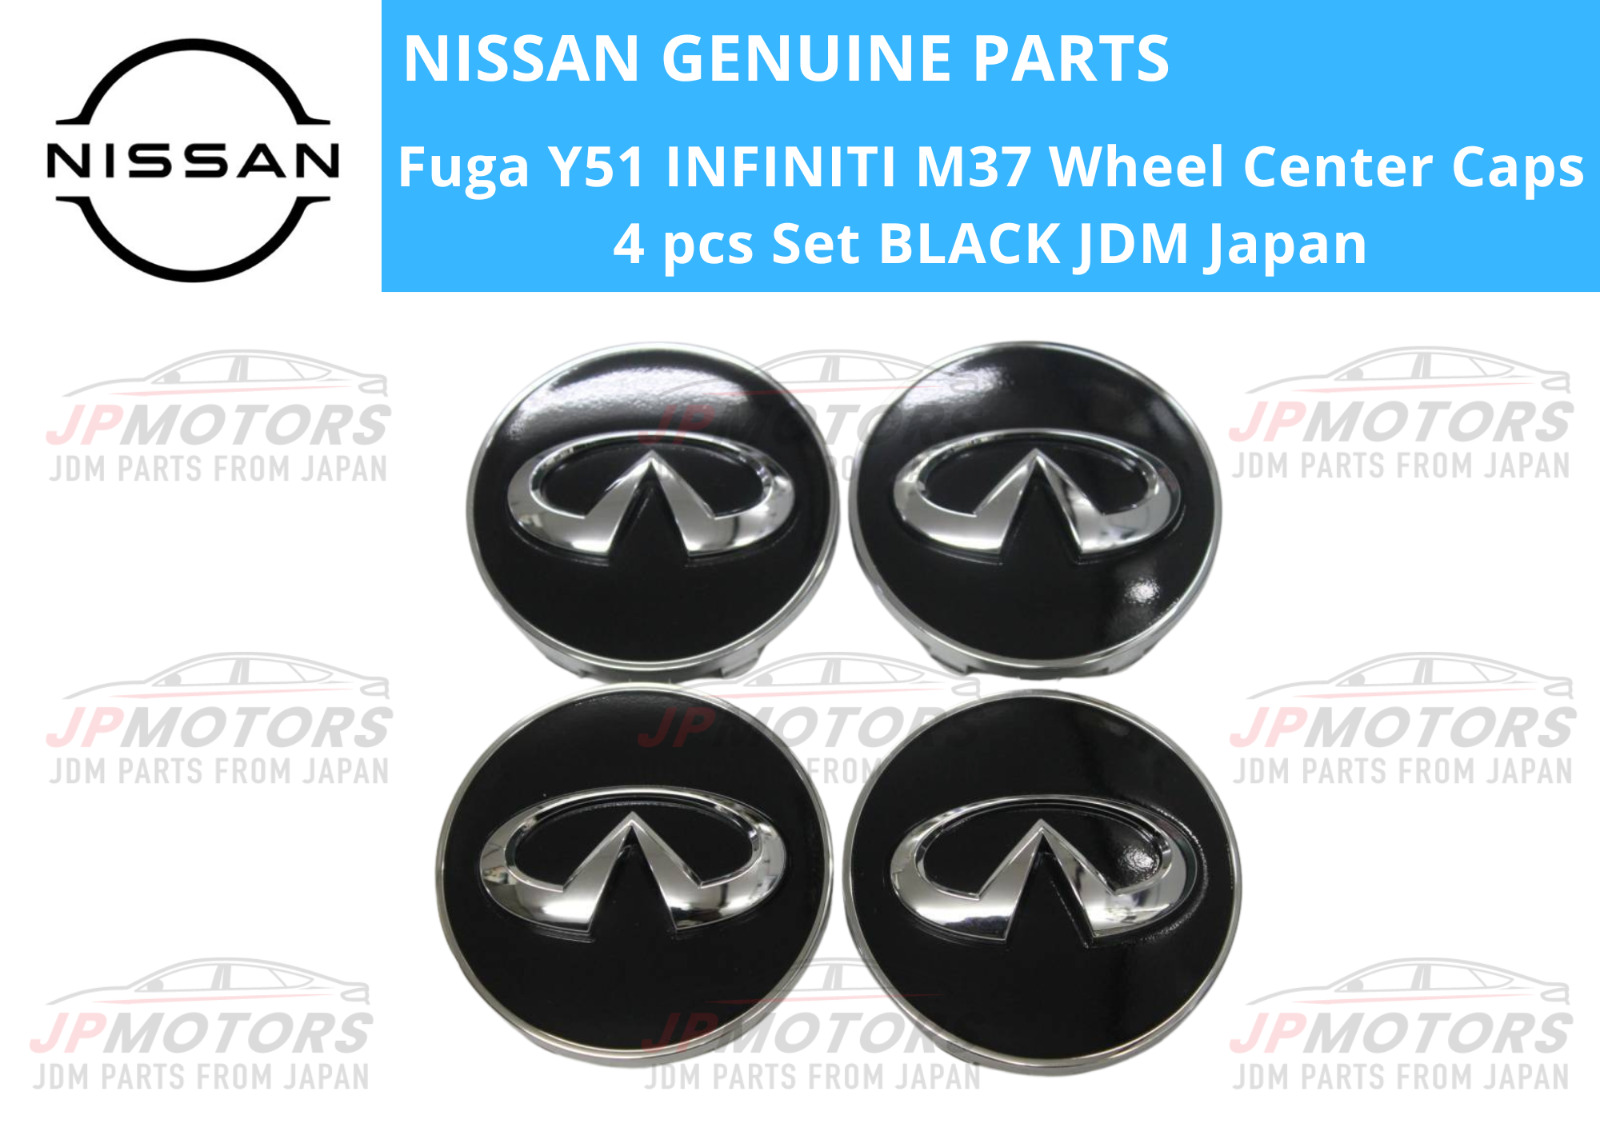 Genuine NISSAN Fuga Y51 INFINITI M37 Wheel Center Caps 4 pcs Set BLACK JDM Japan